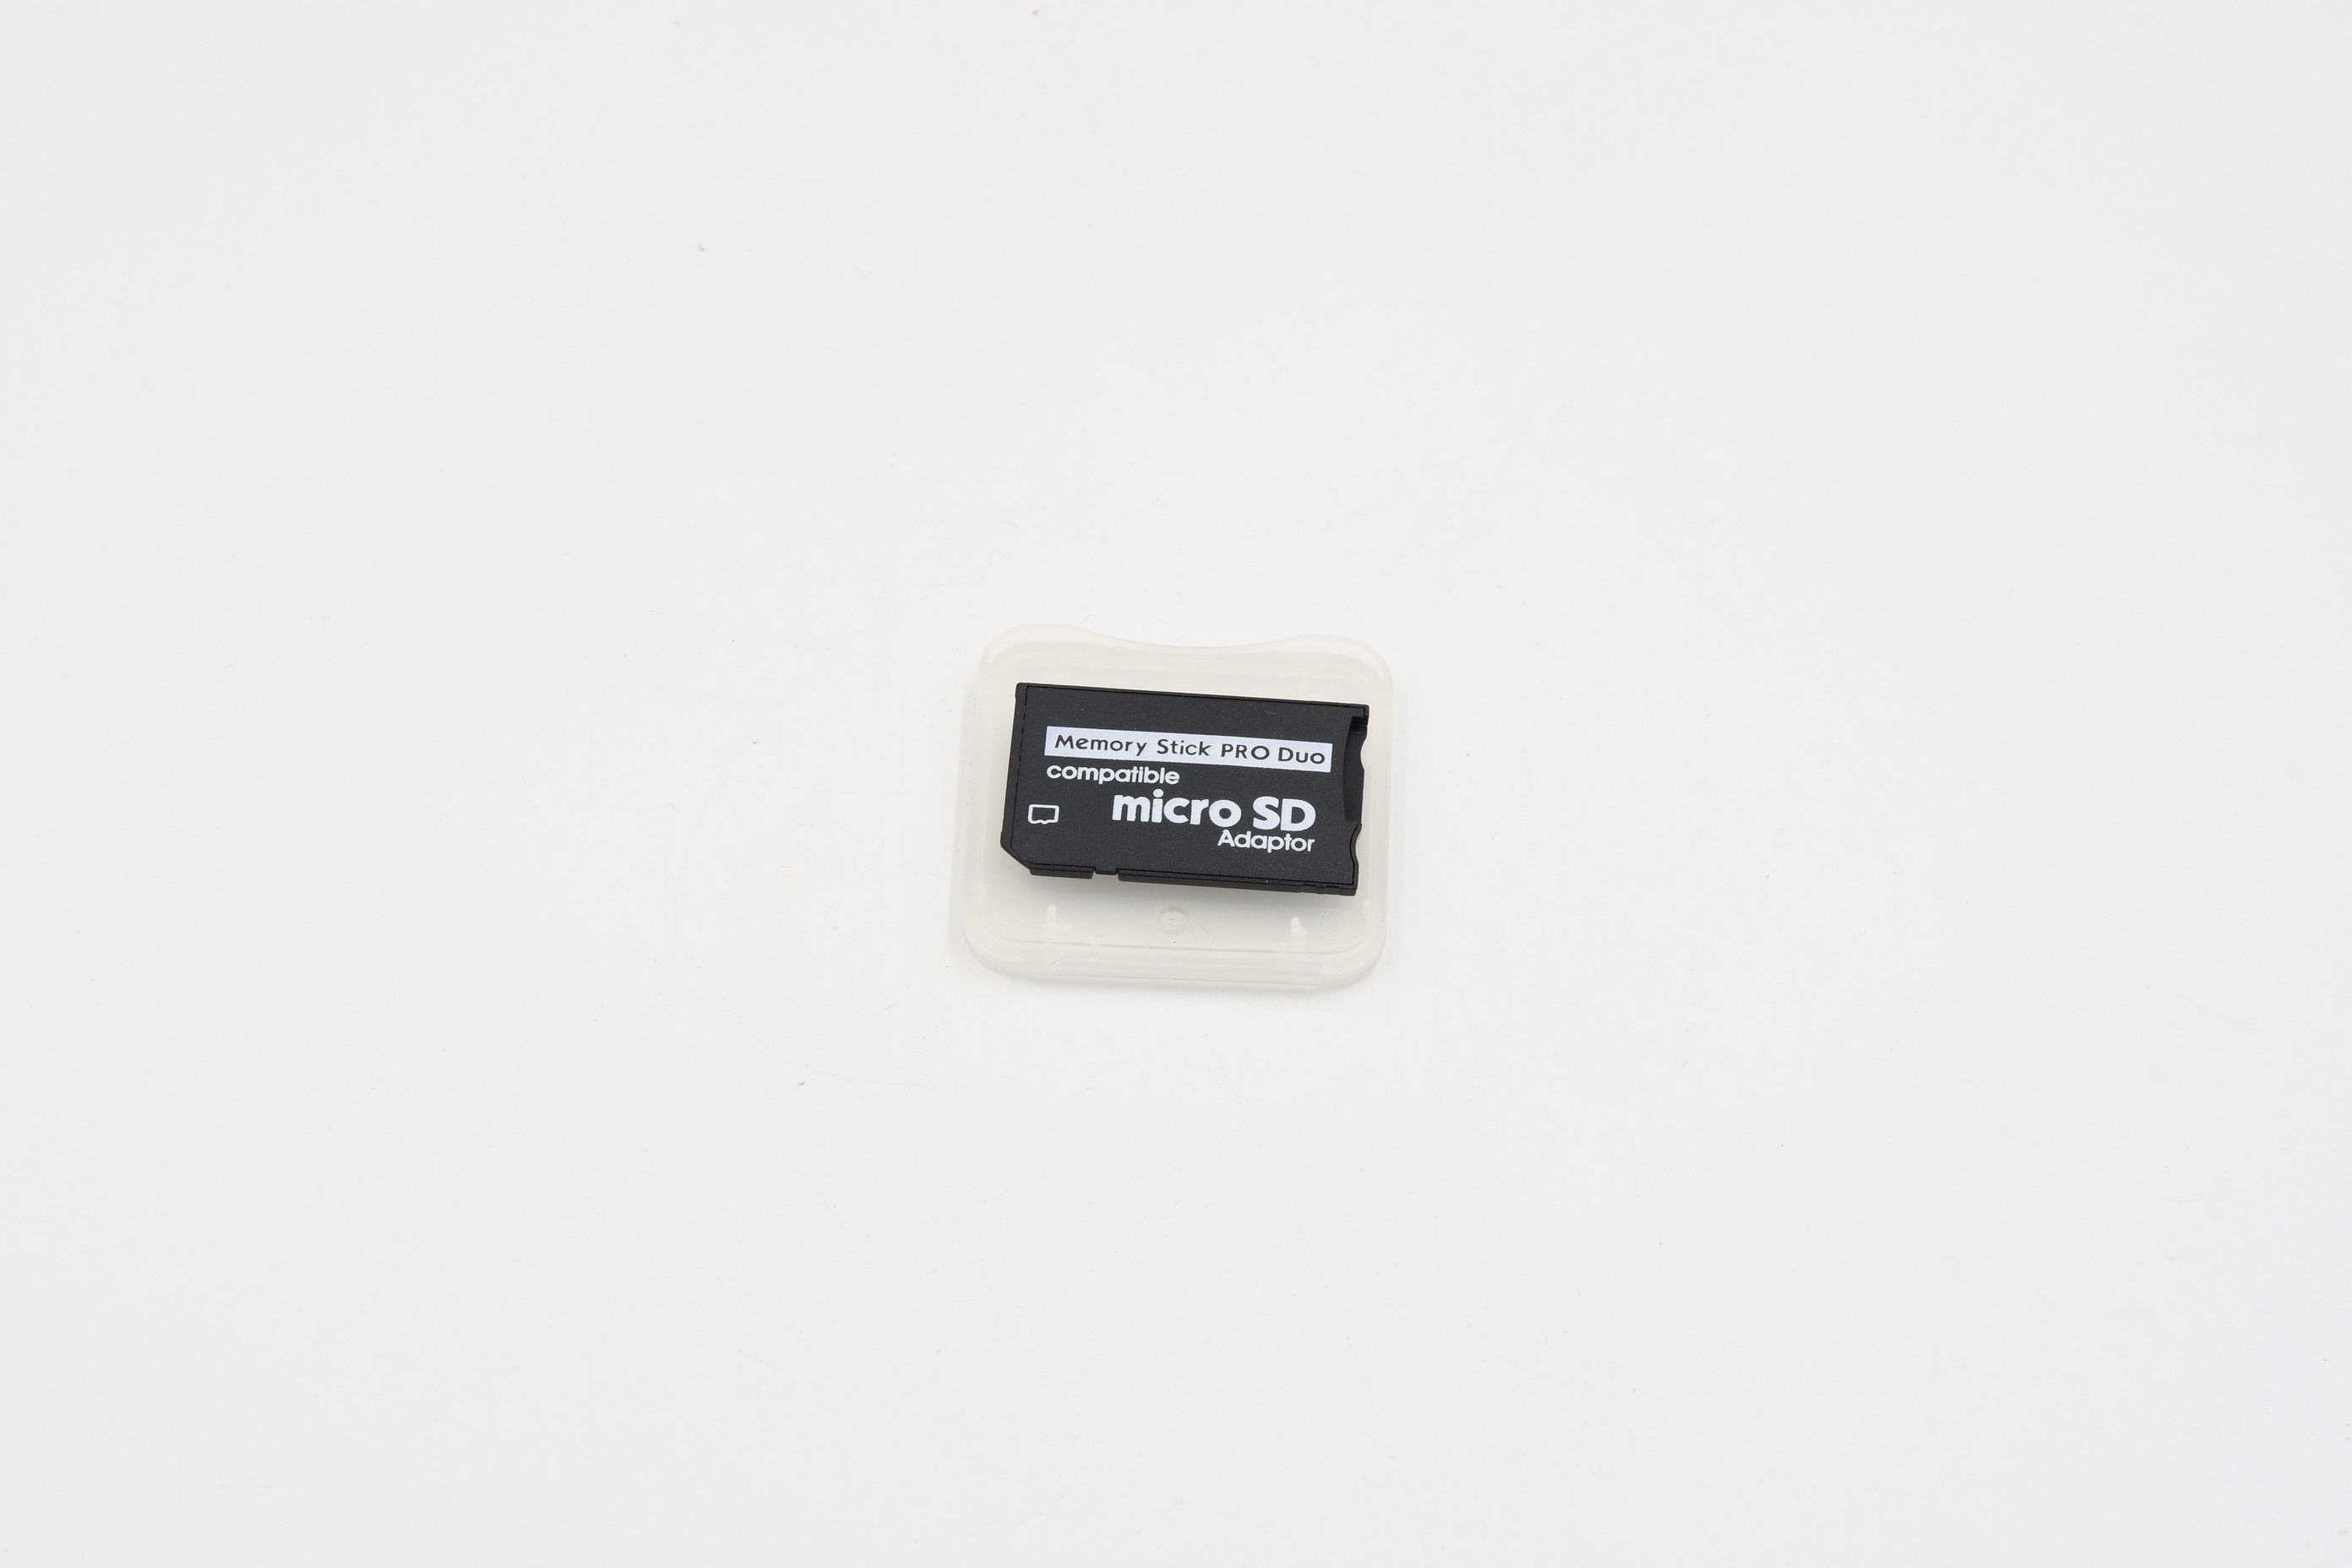  Sony MS PRO Duo - MicroSD ( 5)